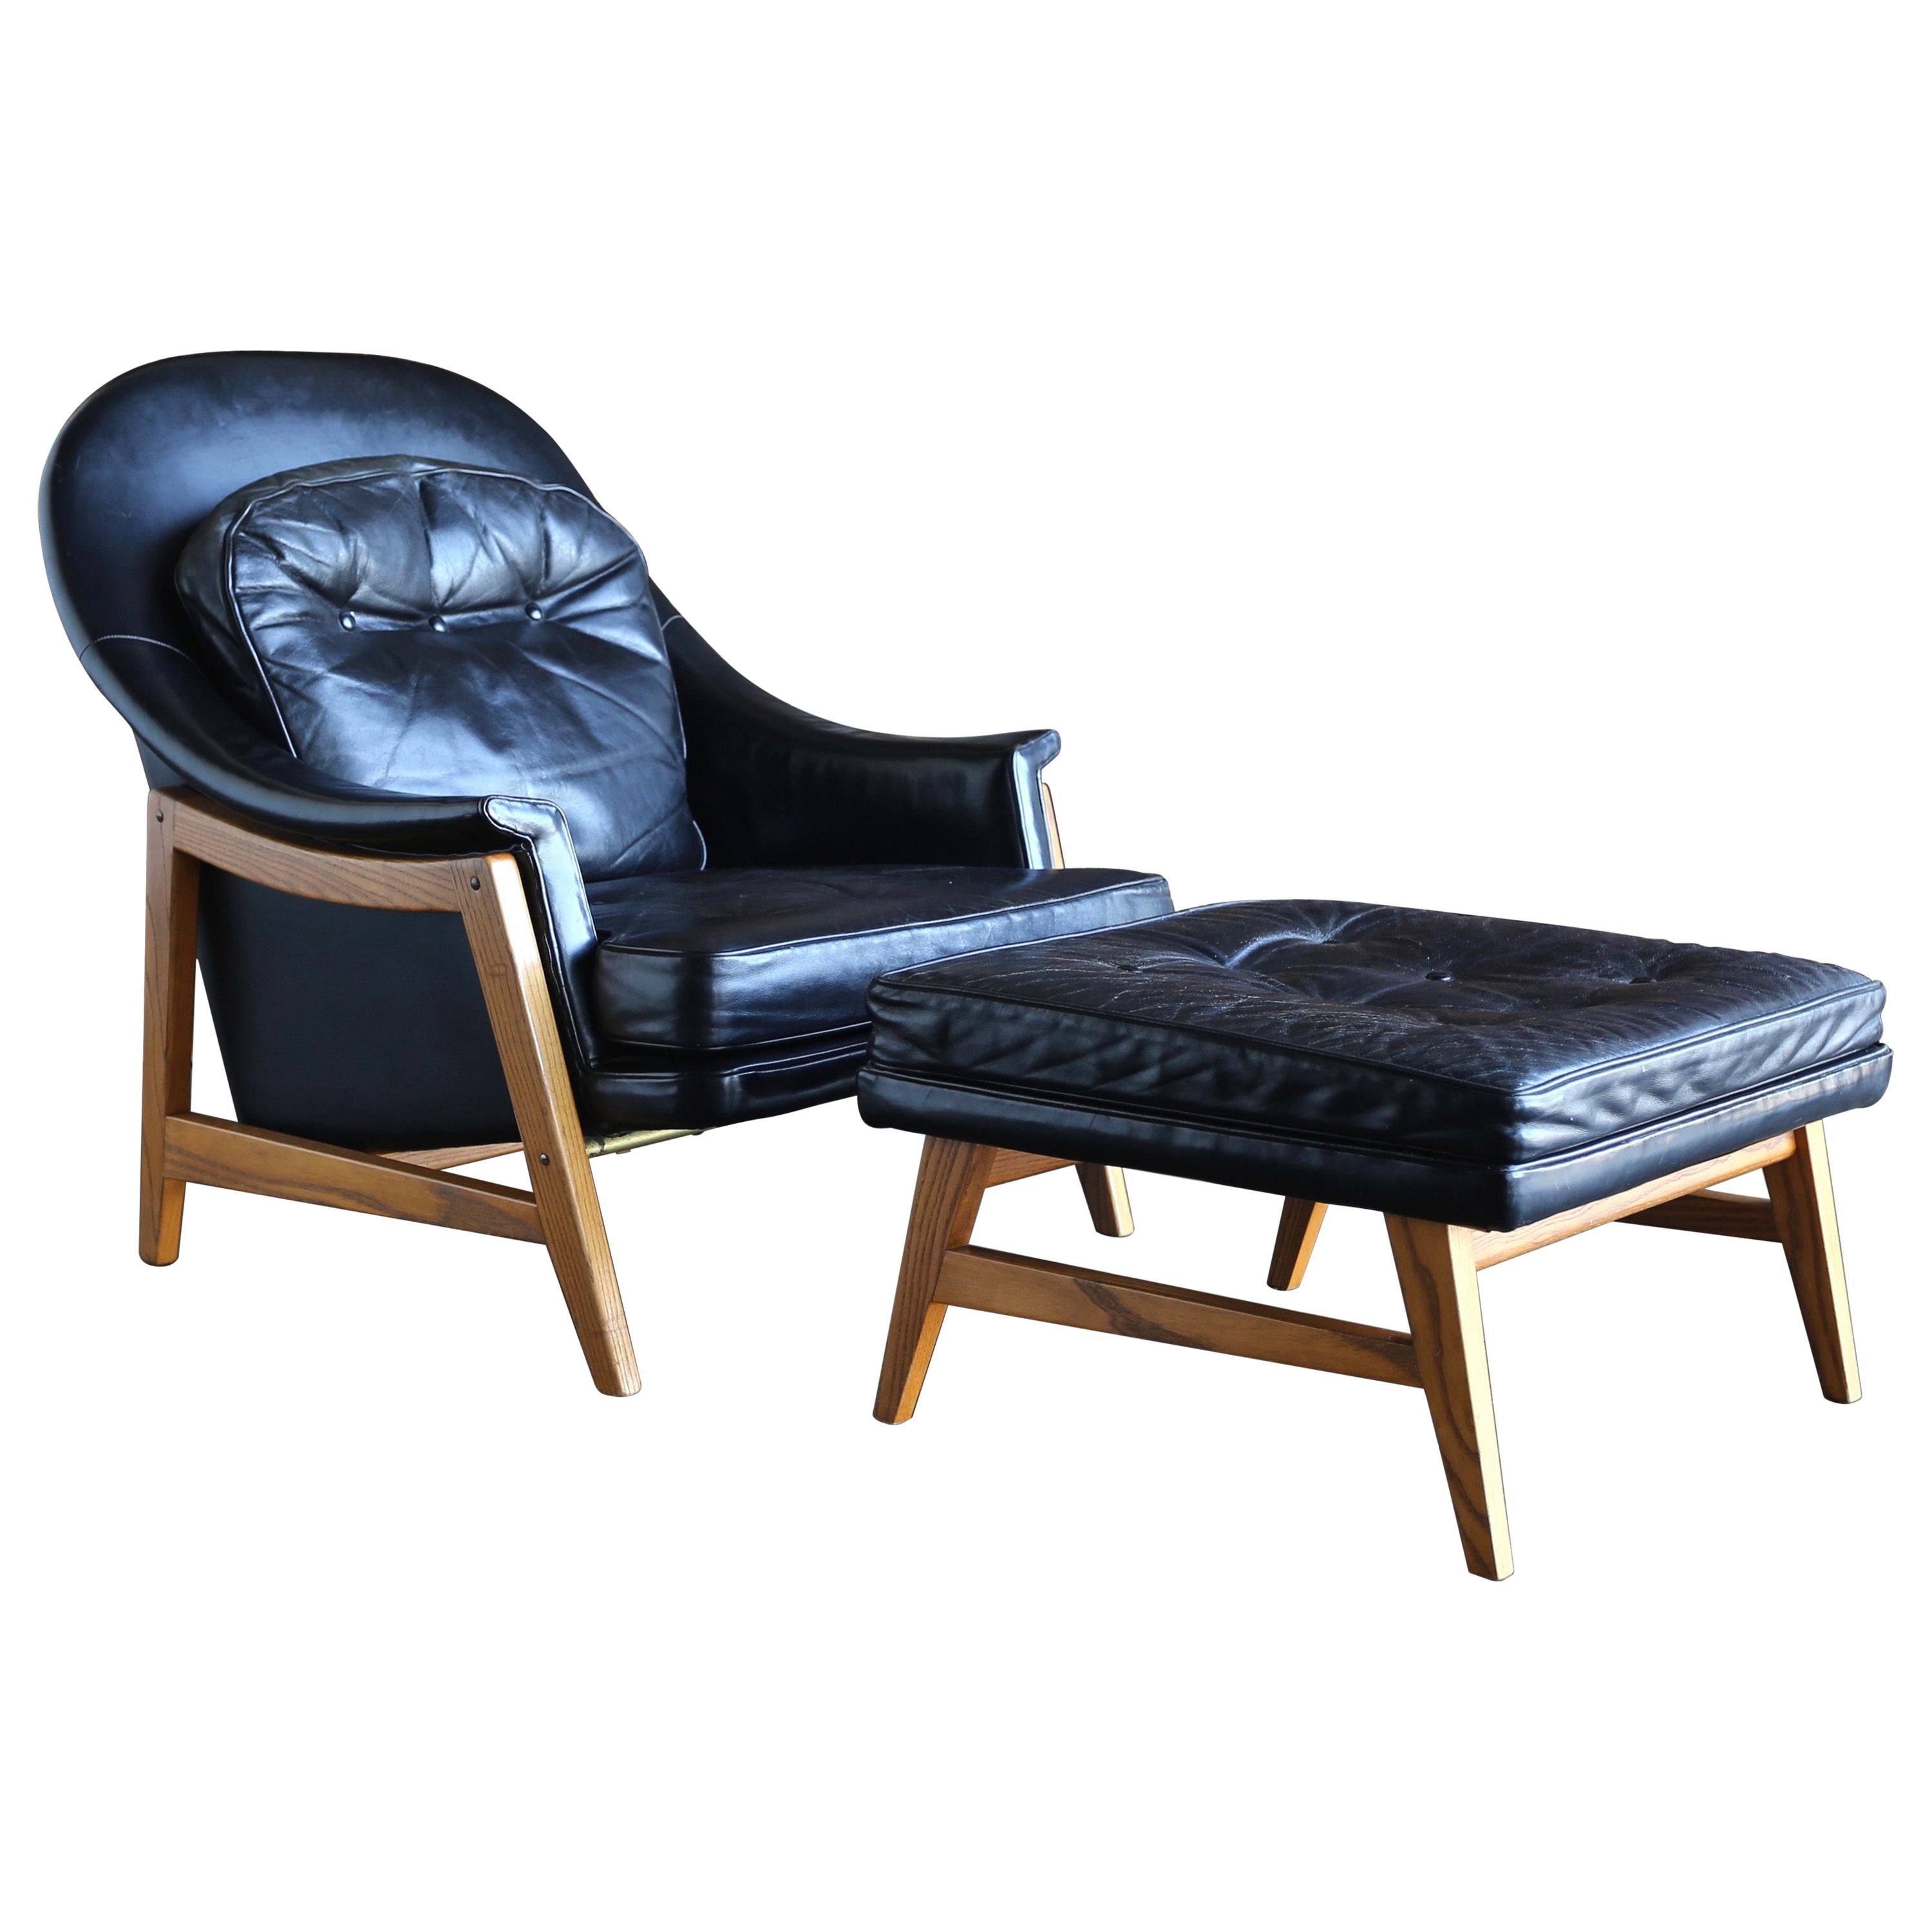 Edward Wormley Leather Lounge Chair and Ottoman for Dunbar, circa 1957